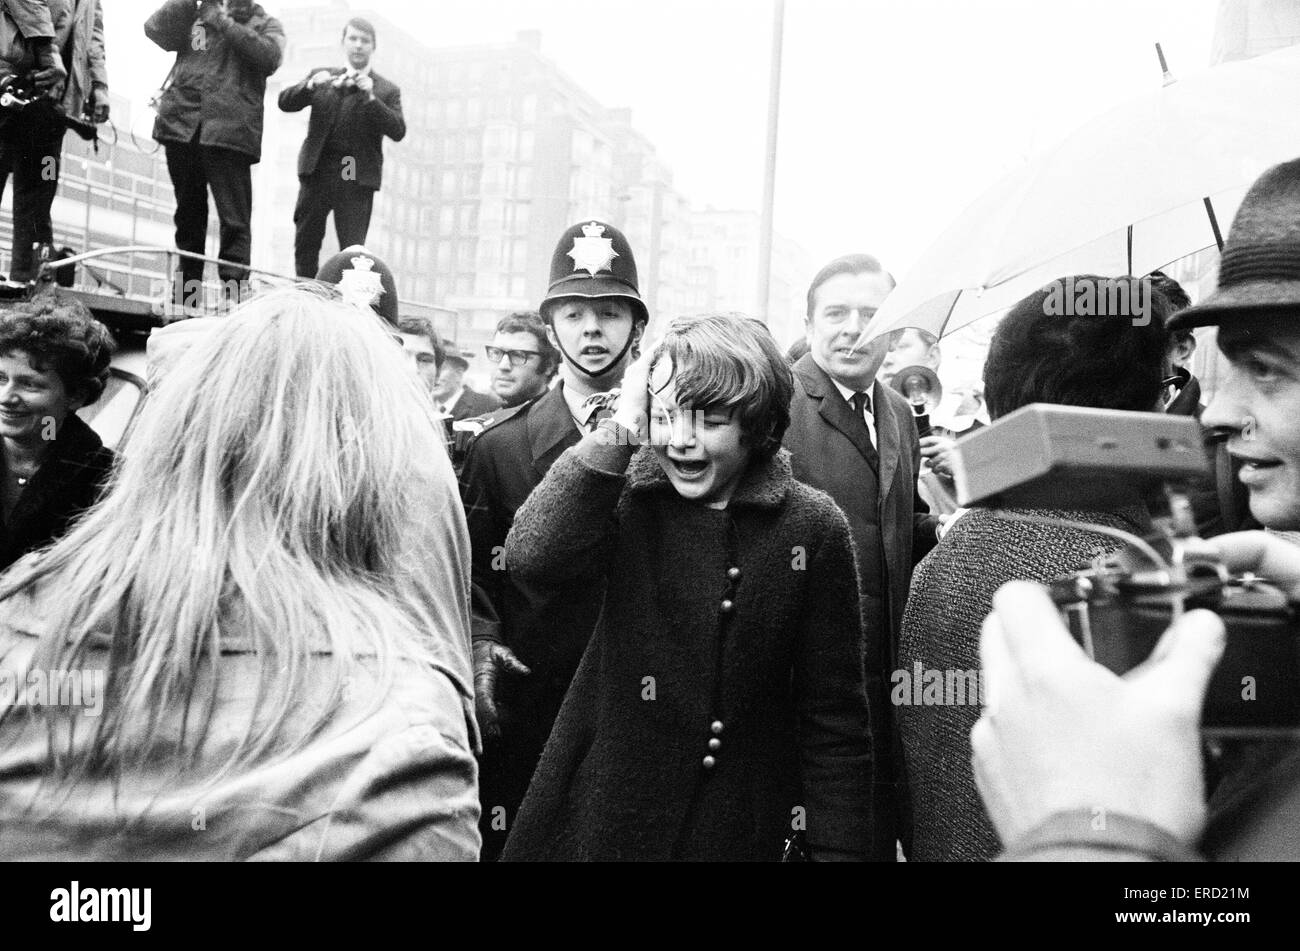 Paul McCartney weds Linda Eastman at Marylebone Registry Office, London, Wednesday 12th March 1969. Stock Photo